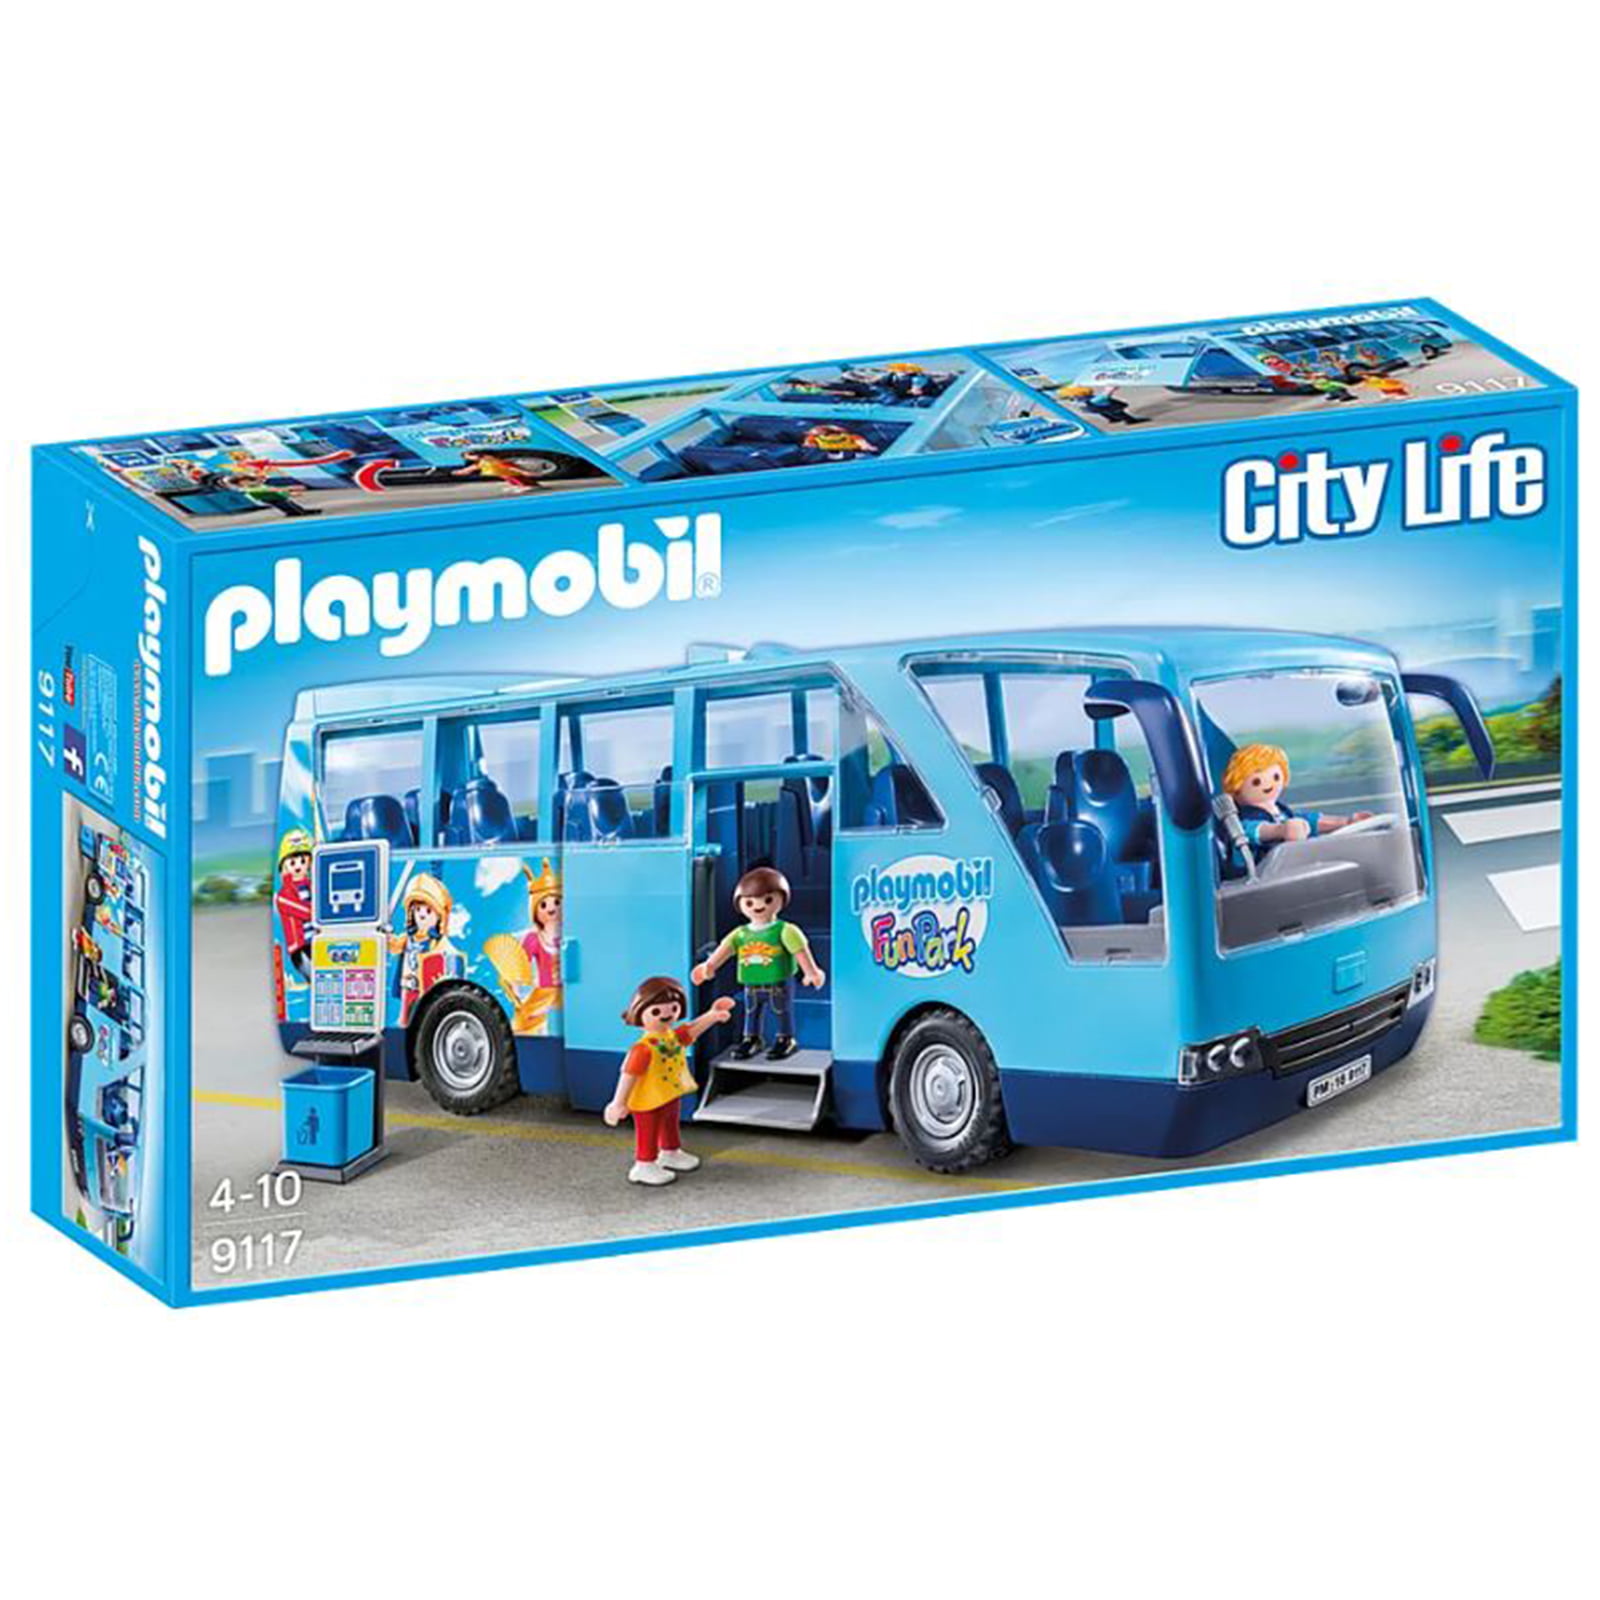 Vært for Kænguru spredning Playmobil City Life FunPark Bus Building Set 9117 - Walmart.com